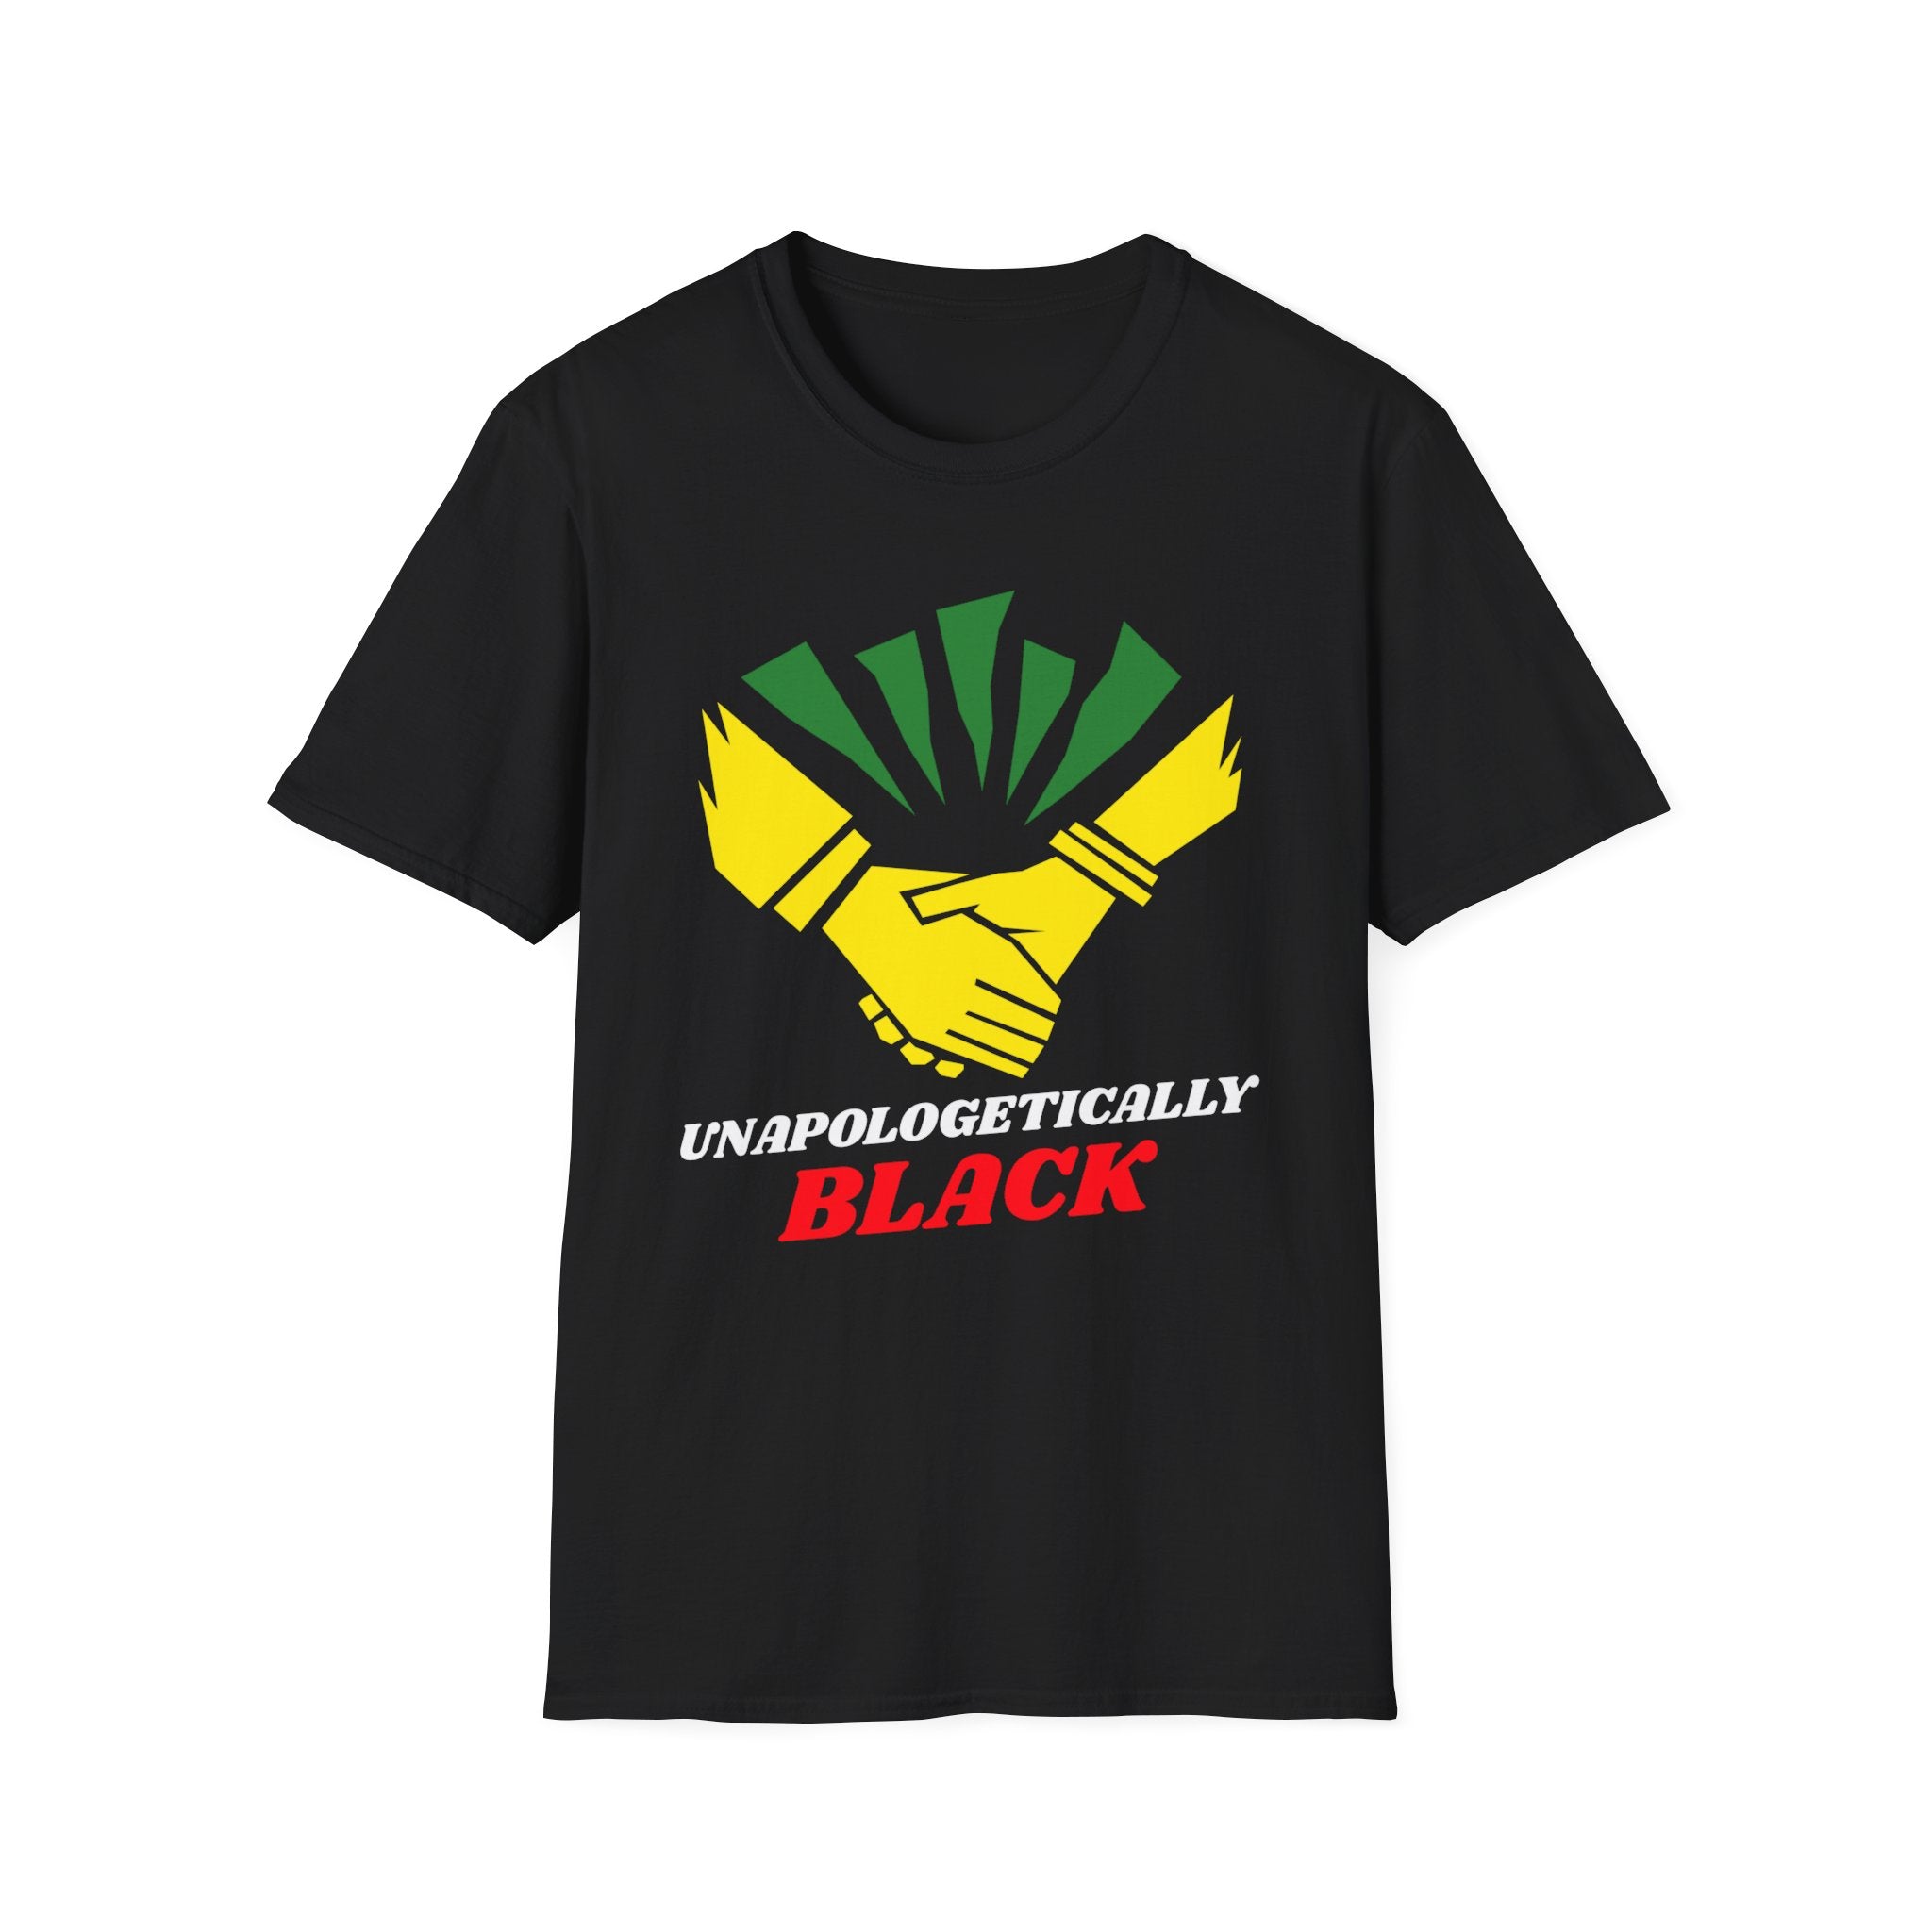 Black History Month Shirt for Men African American Shirts Black History T-Shirt